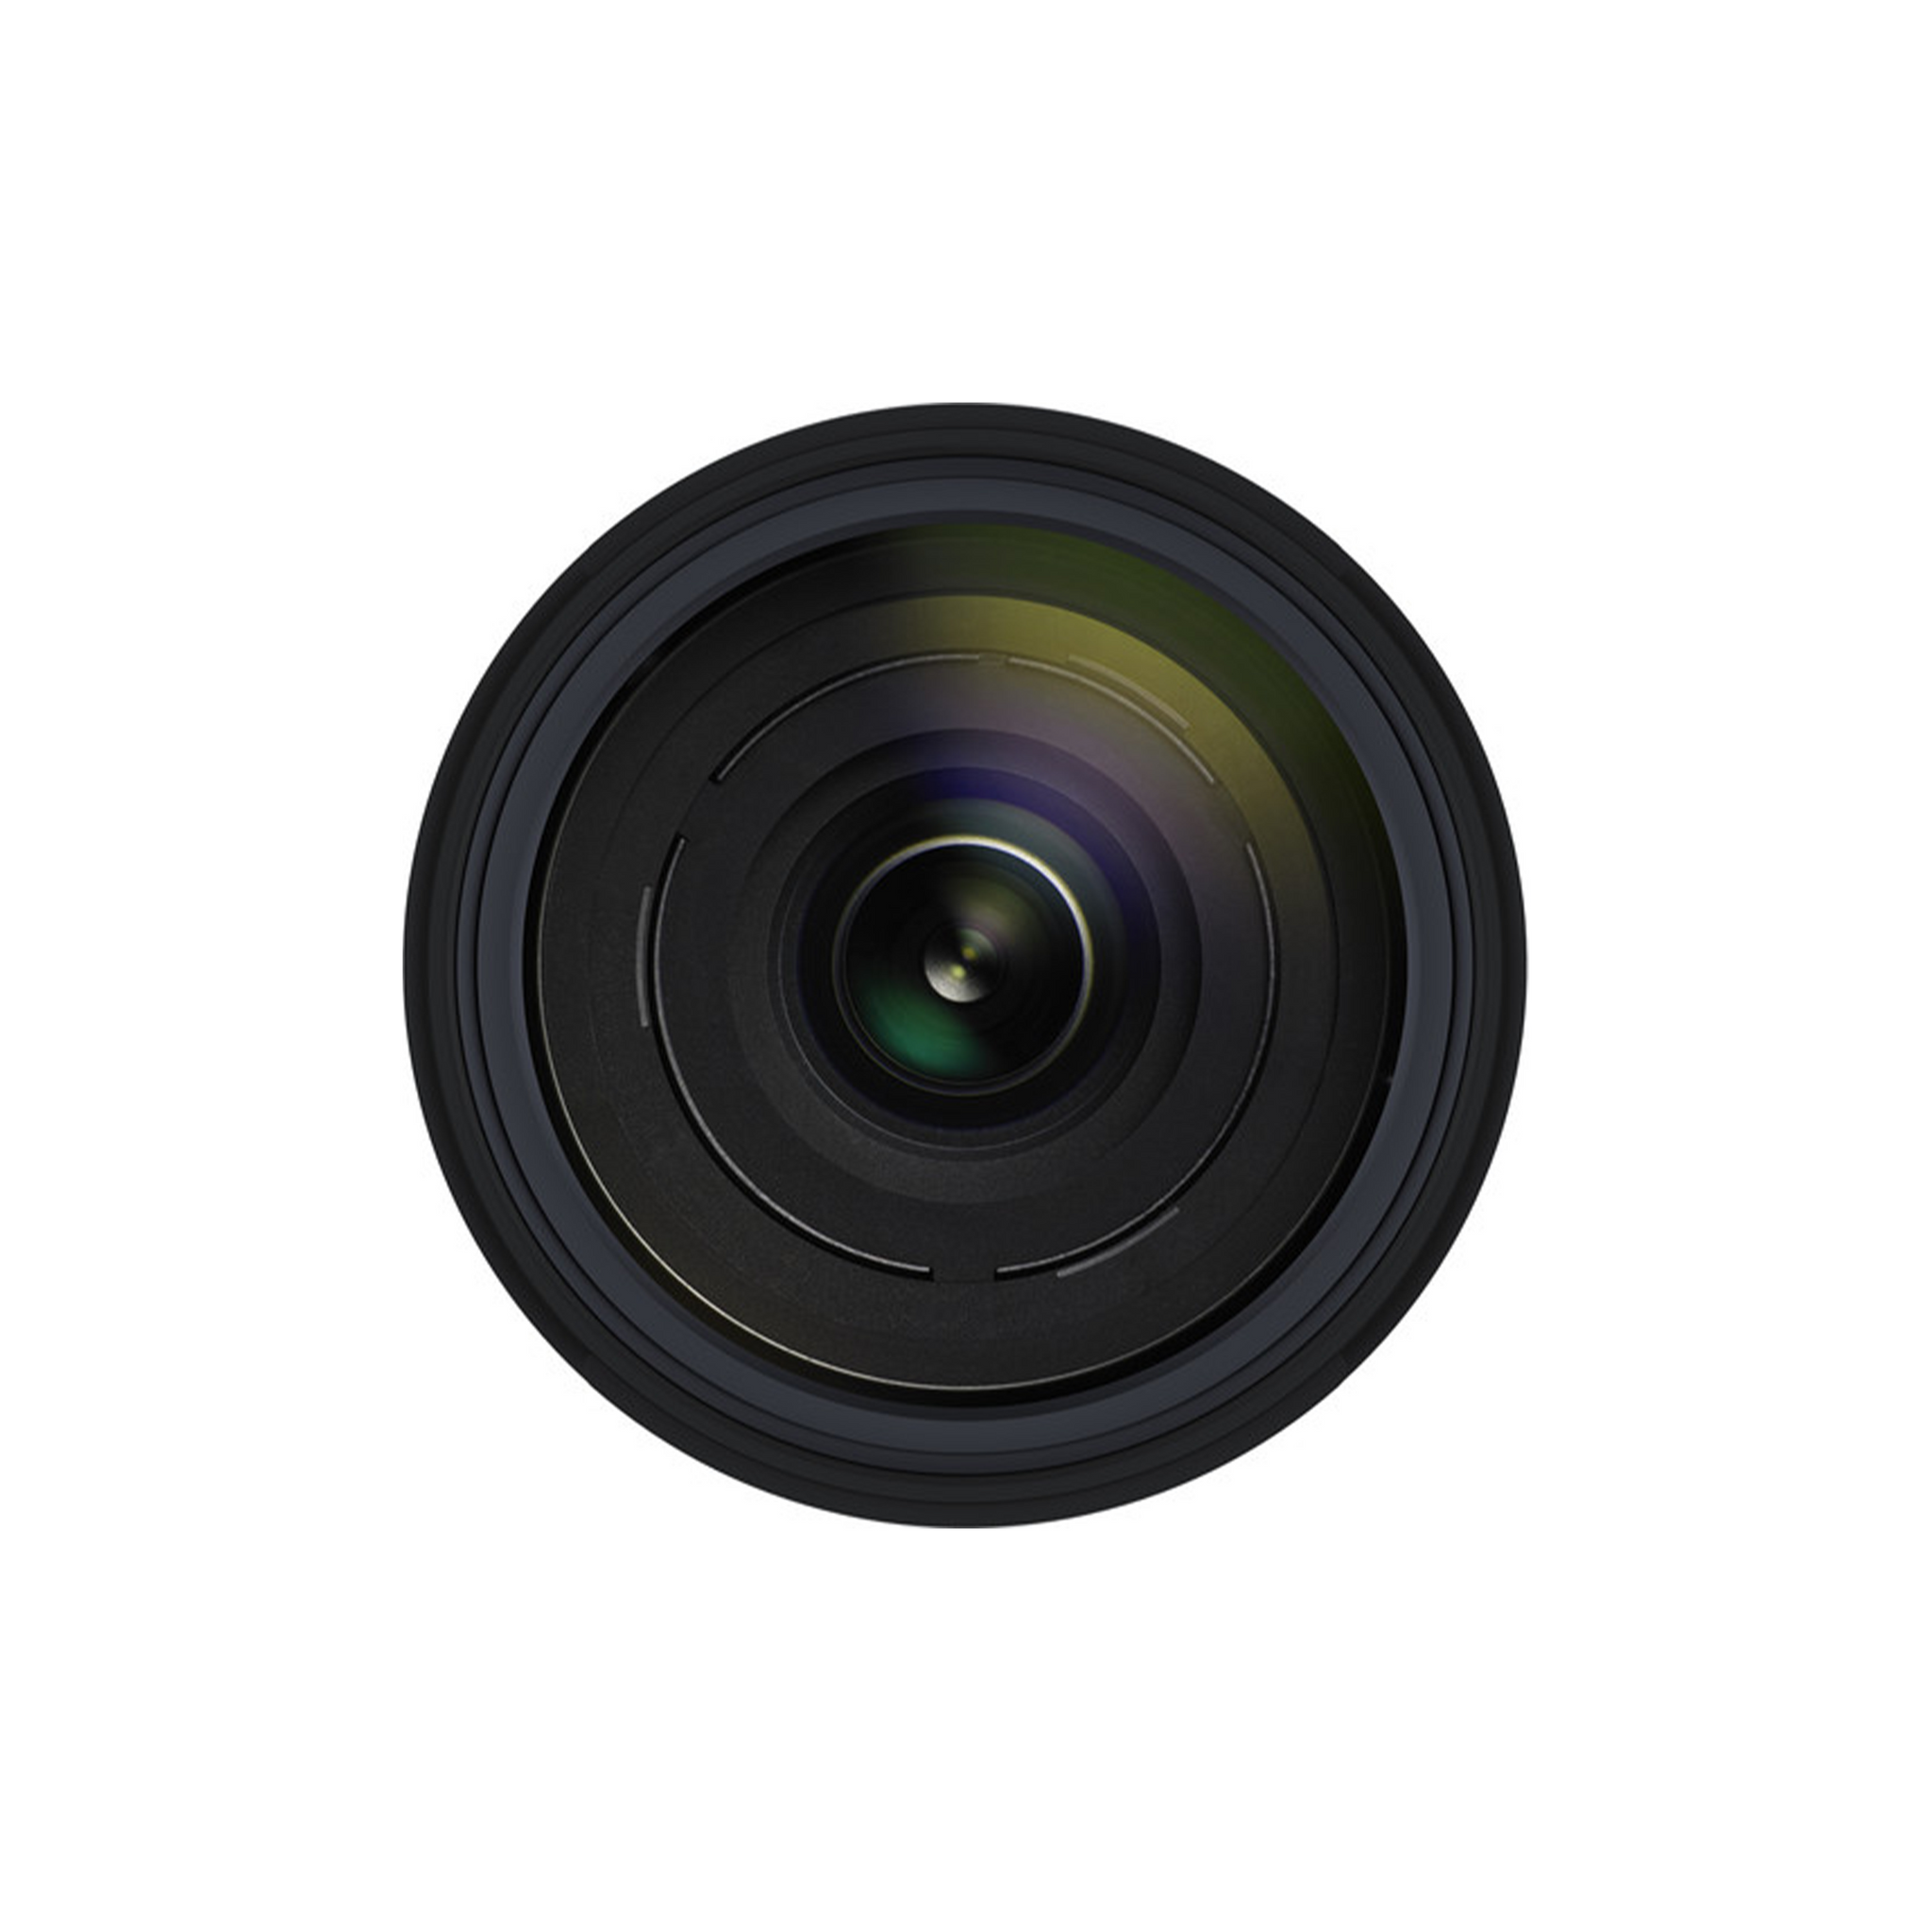 Tamron AF 18-400mm F/3.5-6.3 Di II VC HLD Lens (B028) For Nikon-Camera Lenses-futuromic